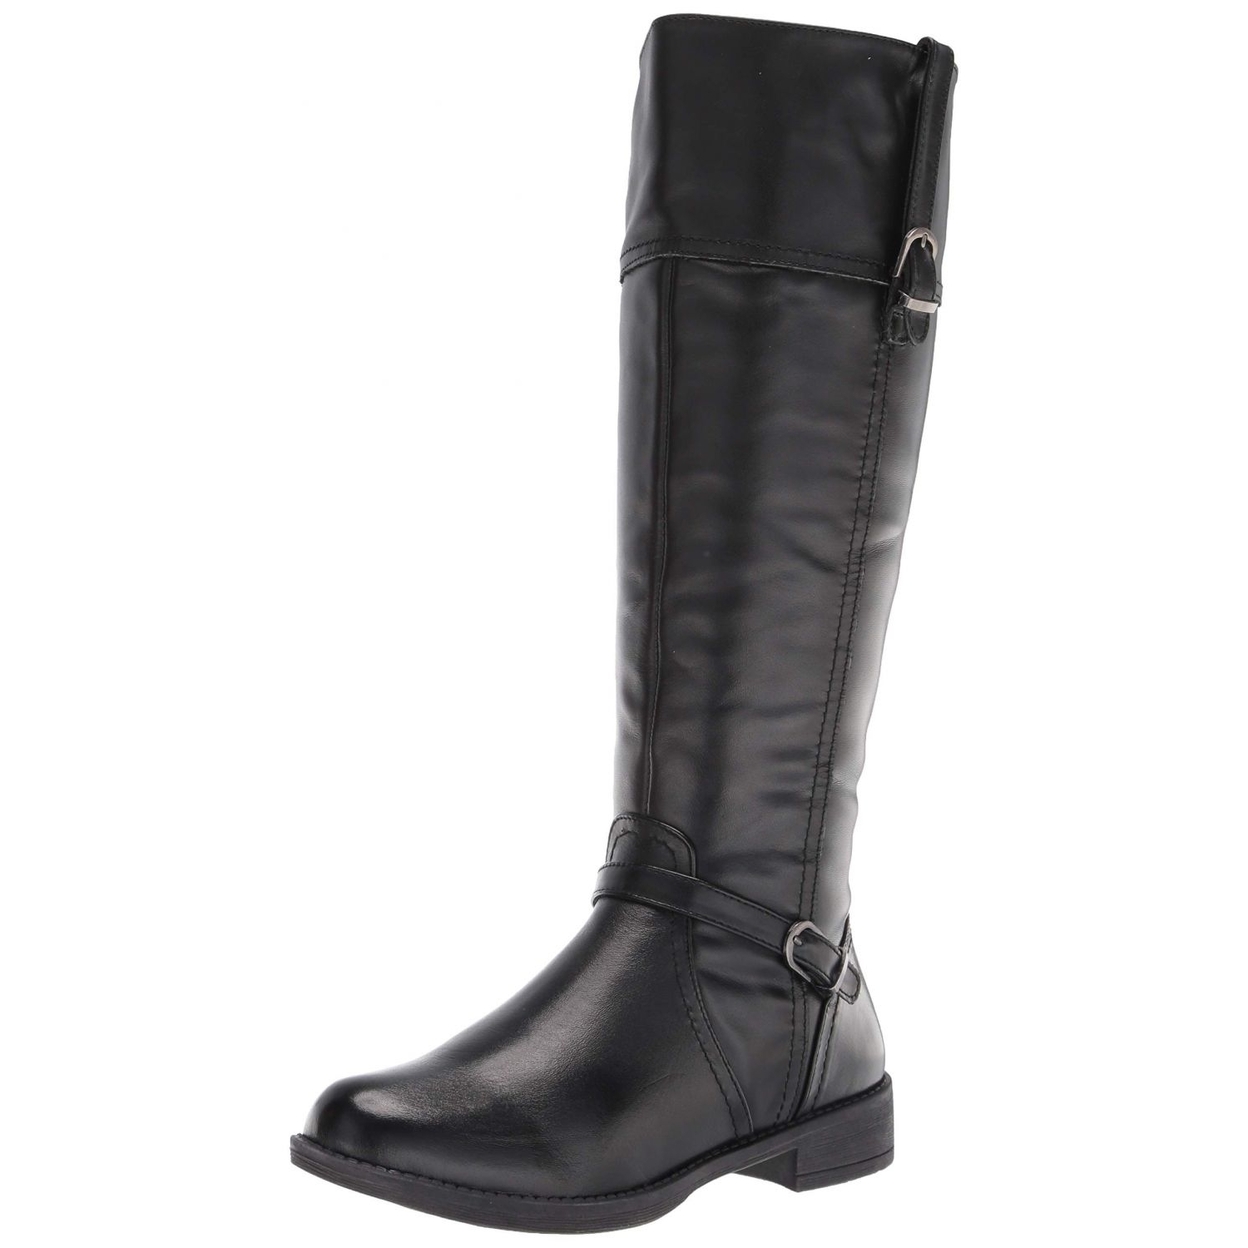 Propet Womens Tasha Zippered Casual Boots Knee High Low Heel 1-2 - Black BROWN - BROWN, 11